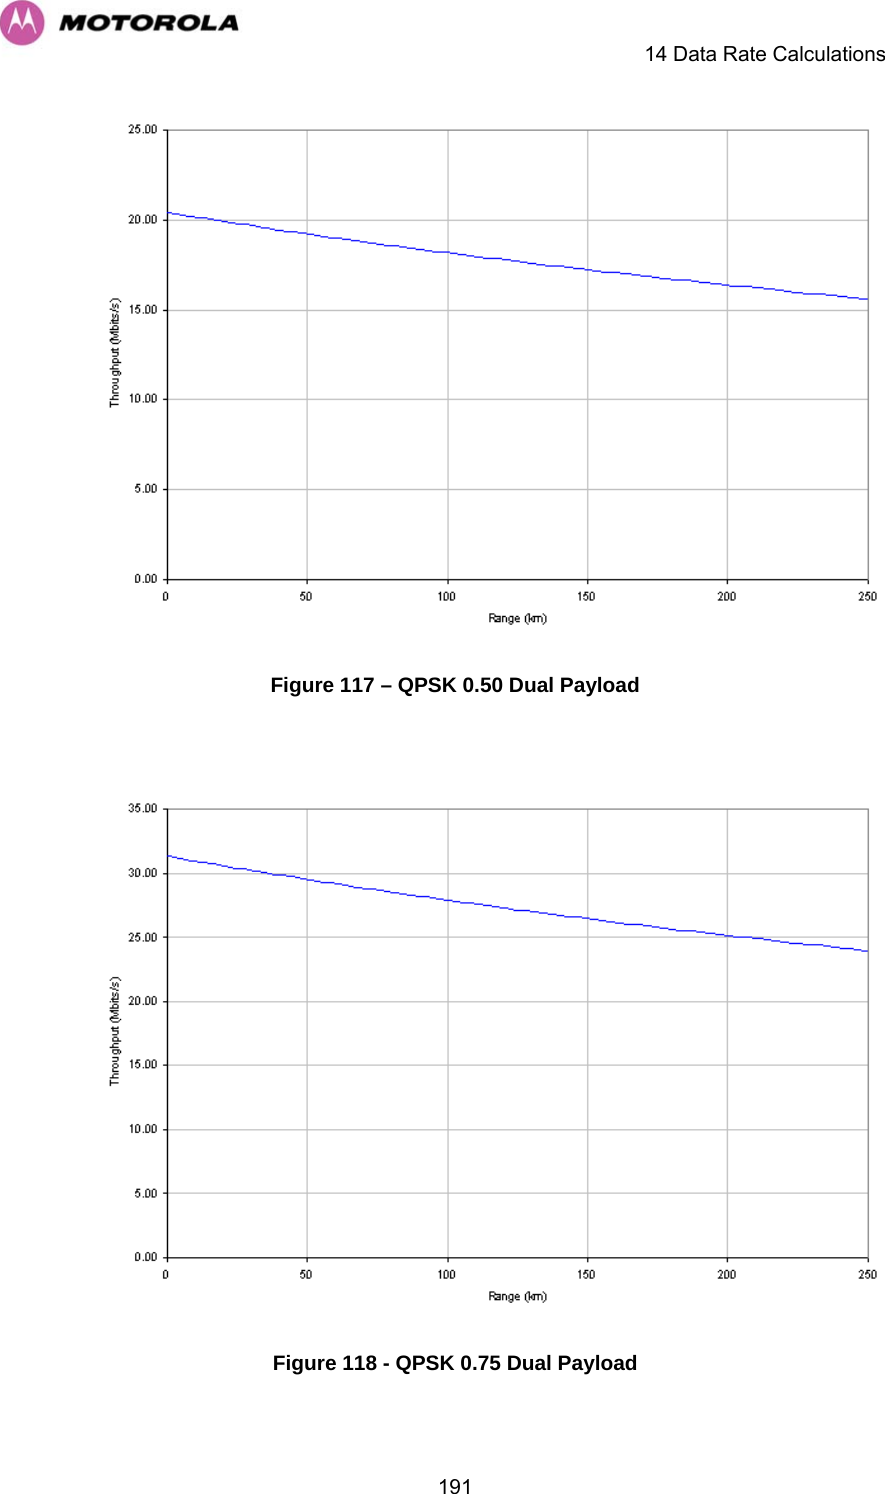     14 Data Rate Calculations  191 Figure 117 – QPSK 0.50 Dual Payload   Figure 118 - QPSK 0.75 Dual Payload 